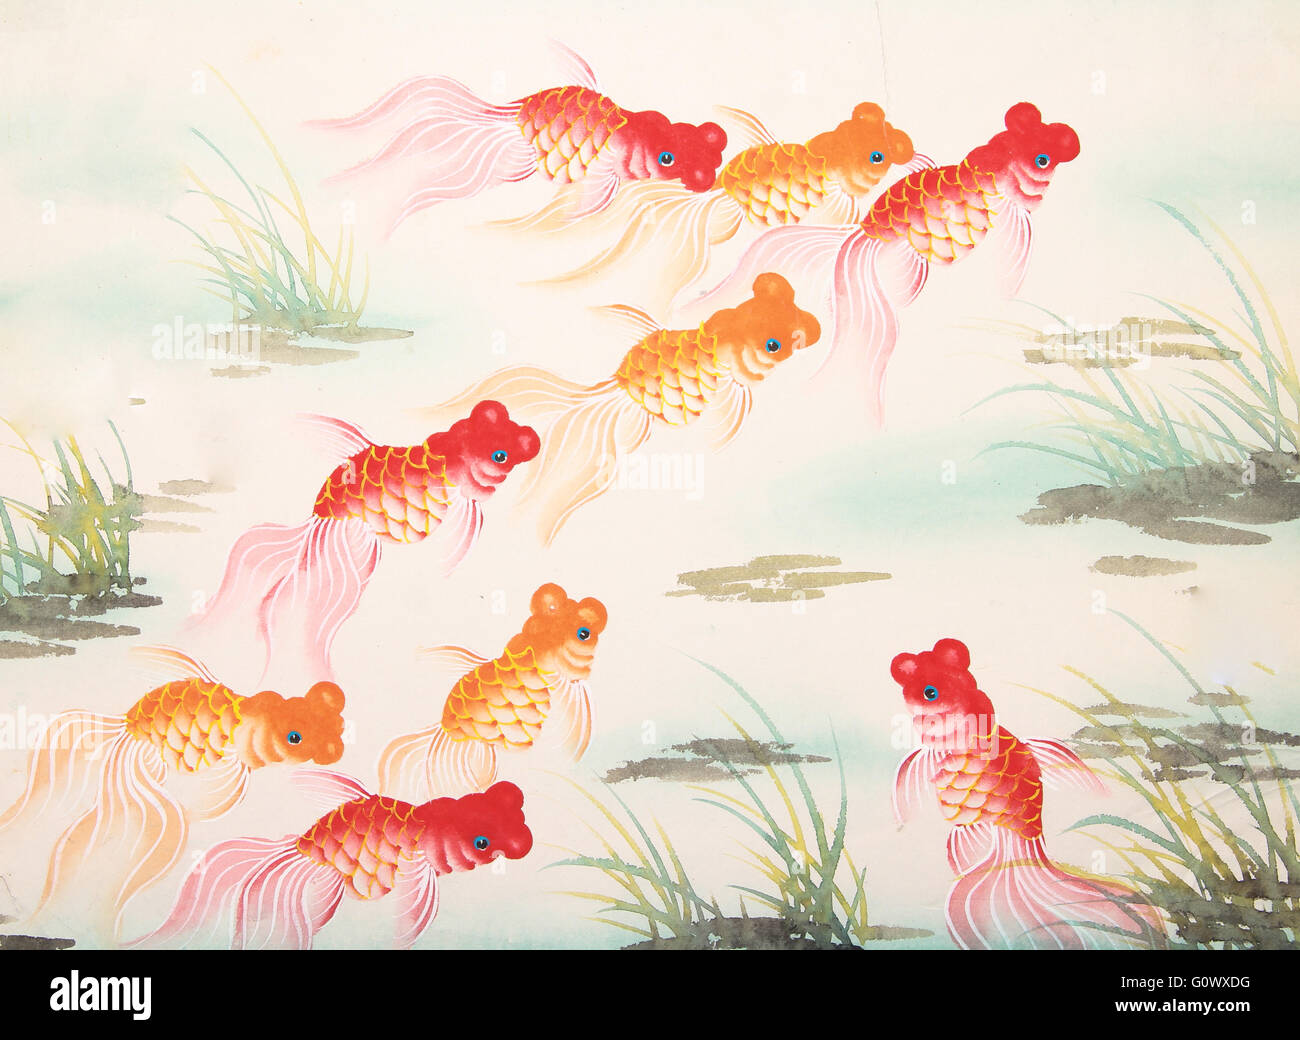 Chinese traditional goldfish painting Stock Photo